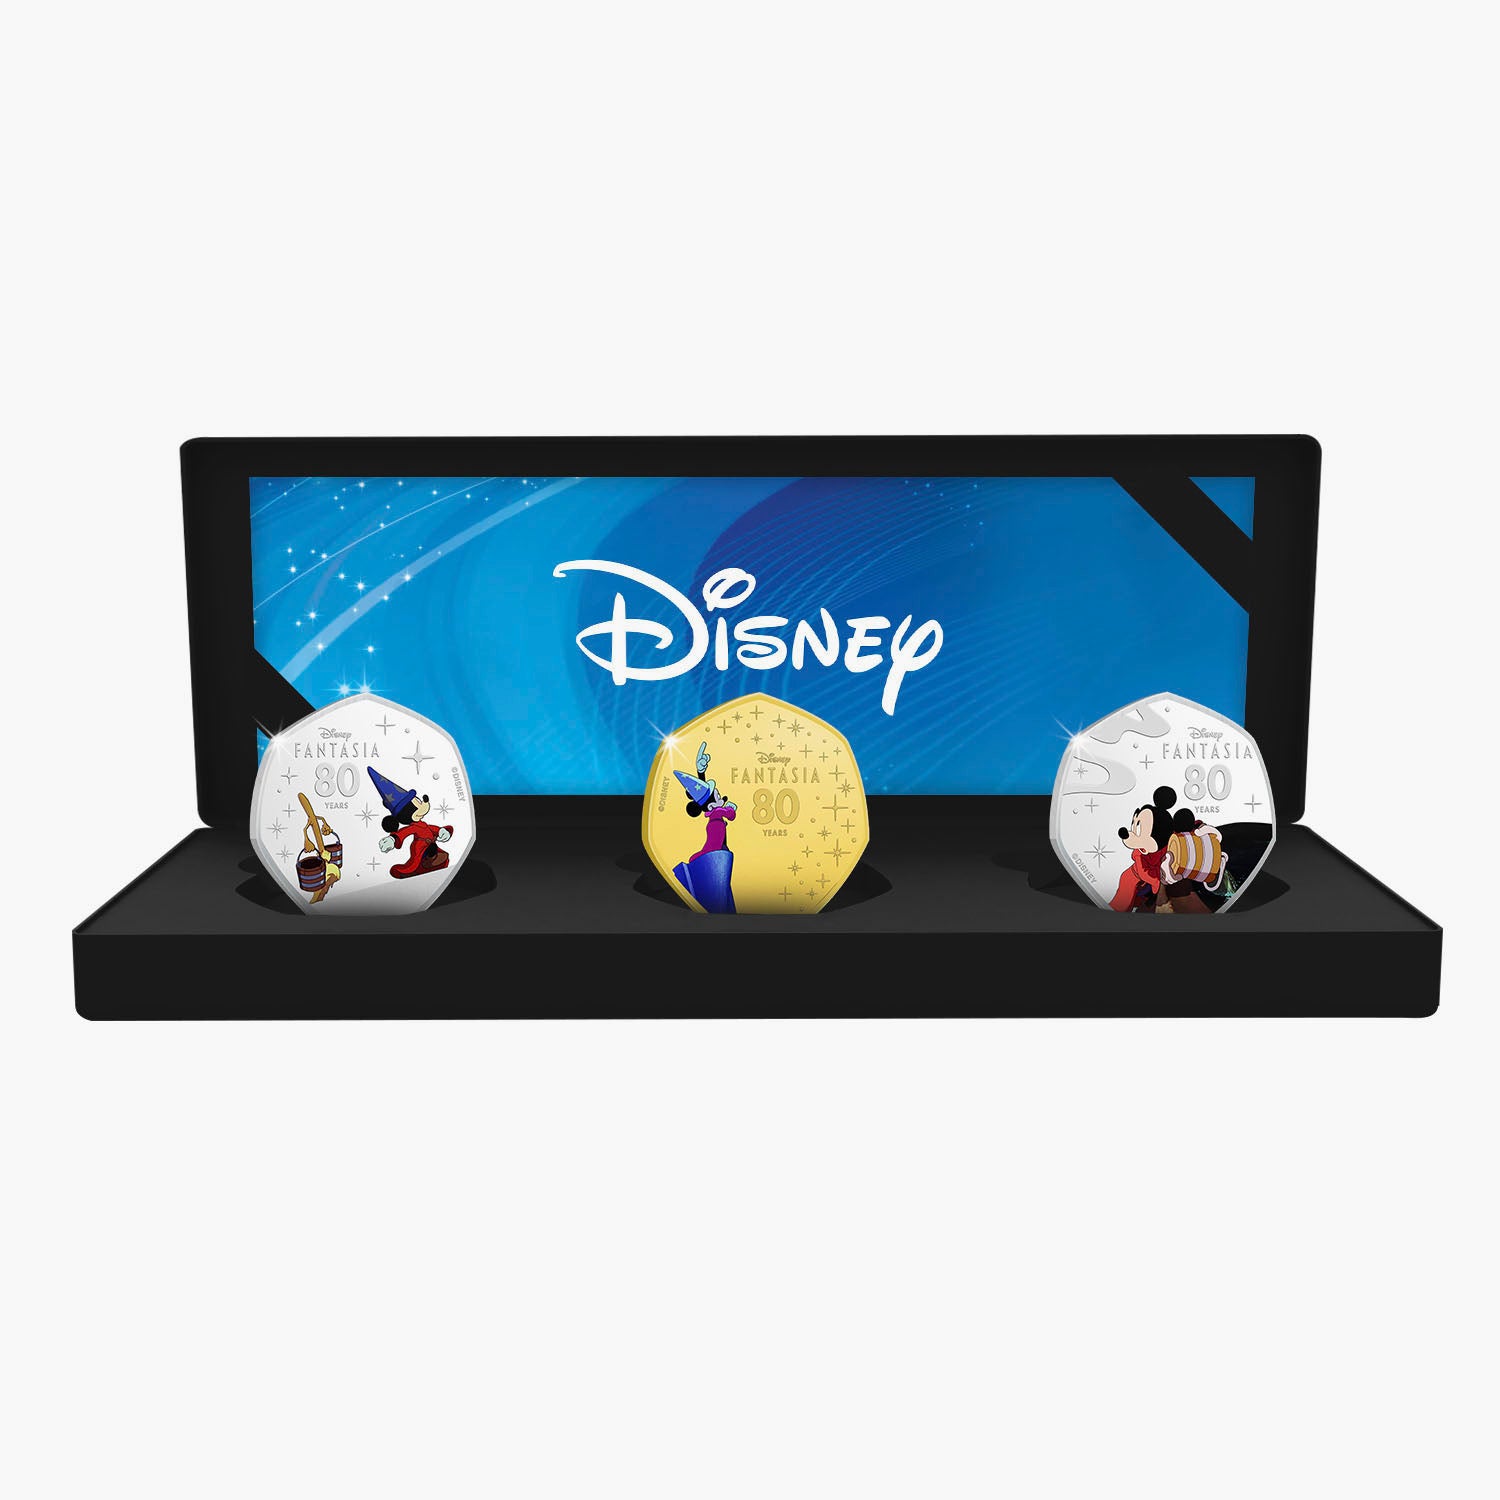 The Disney Fantasia 80th Anniversary Box Set Edition